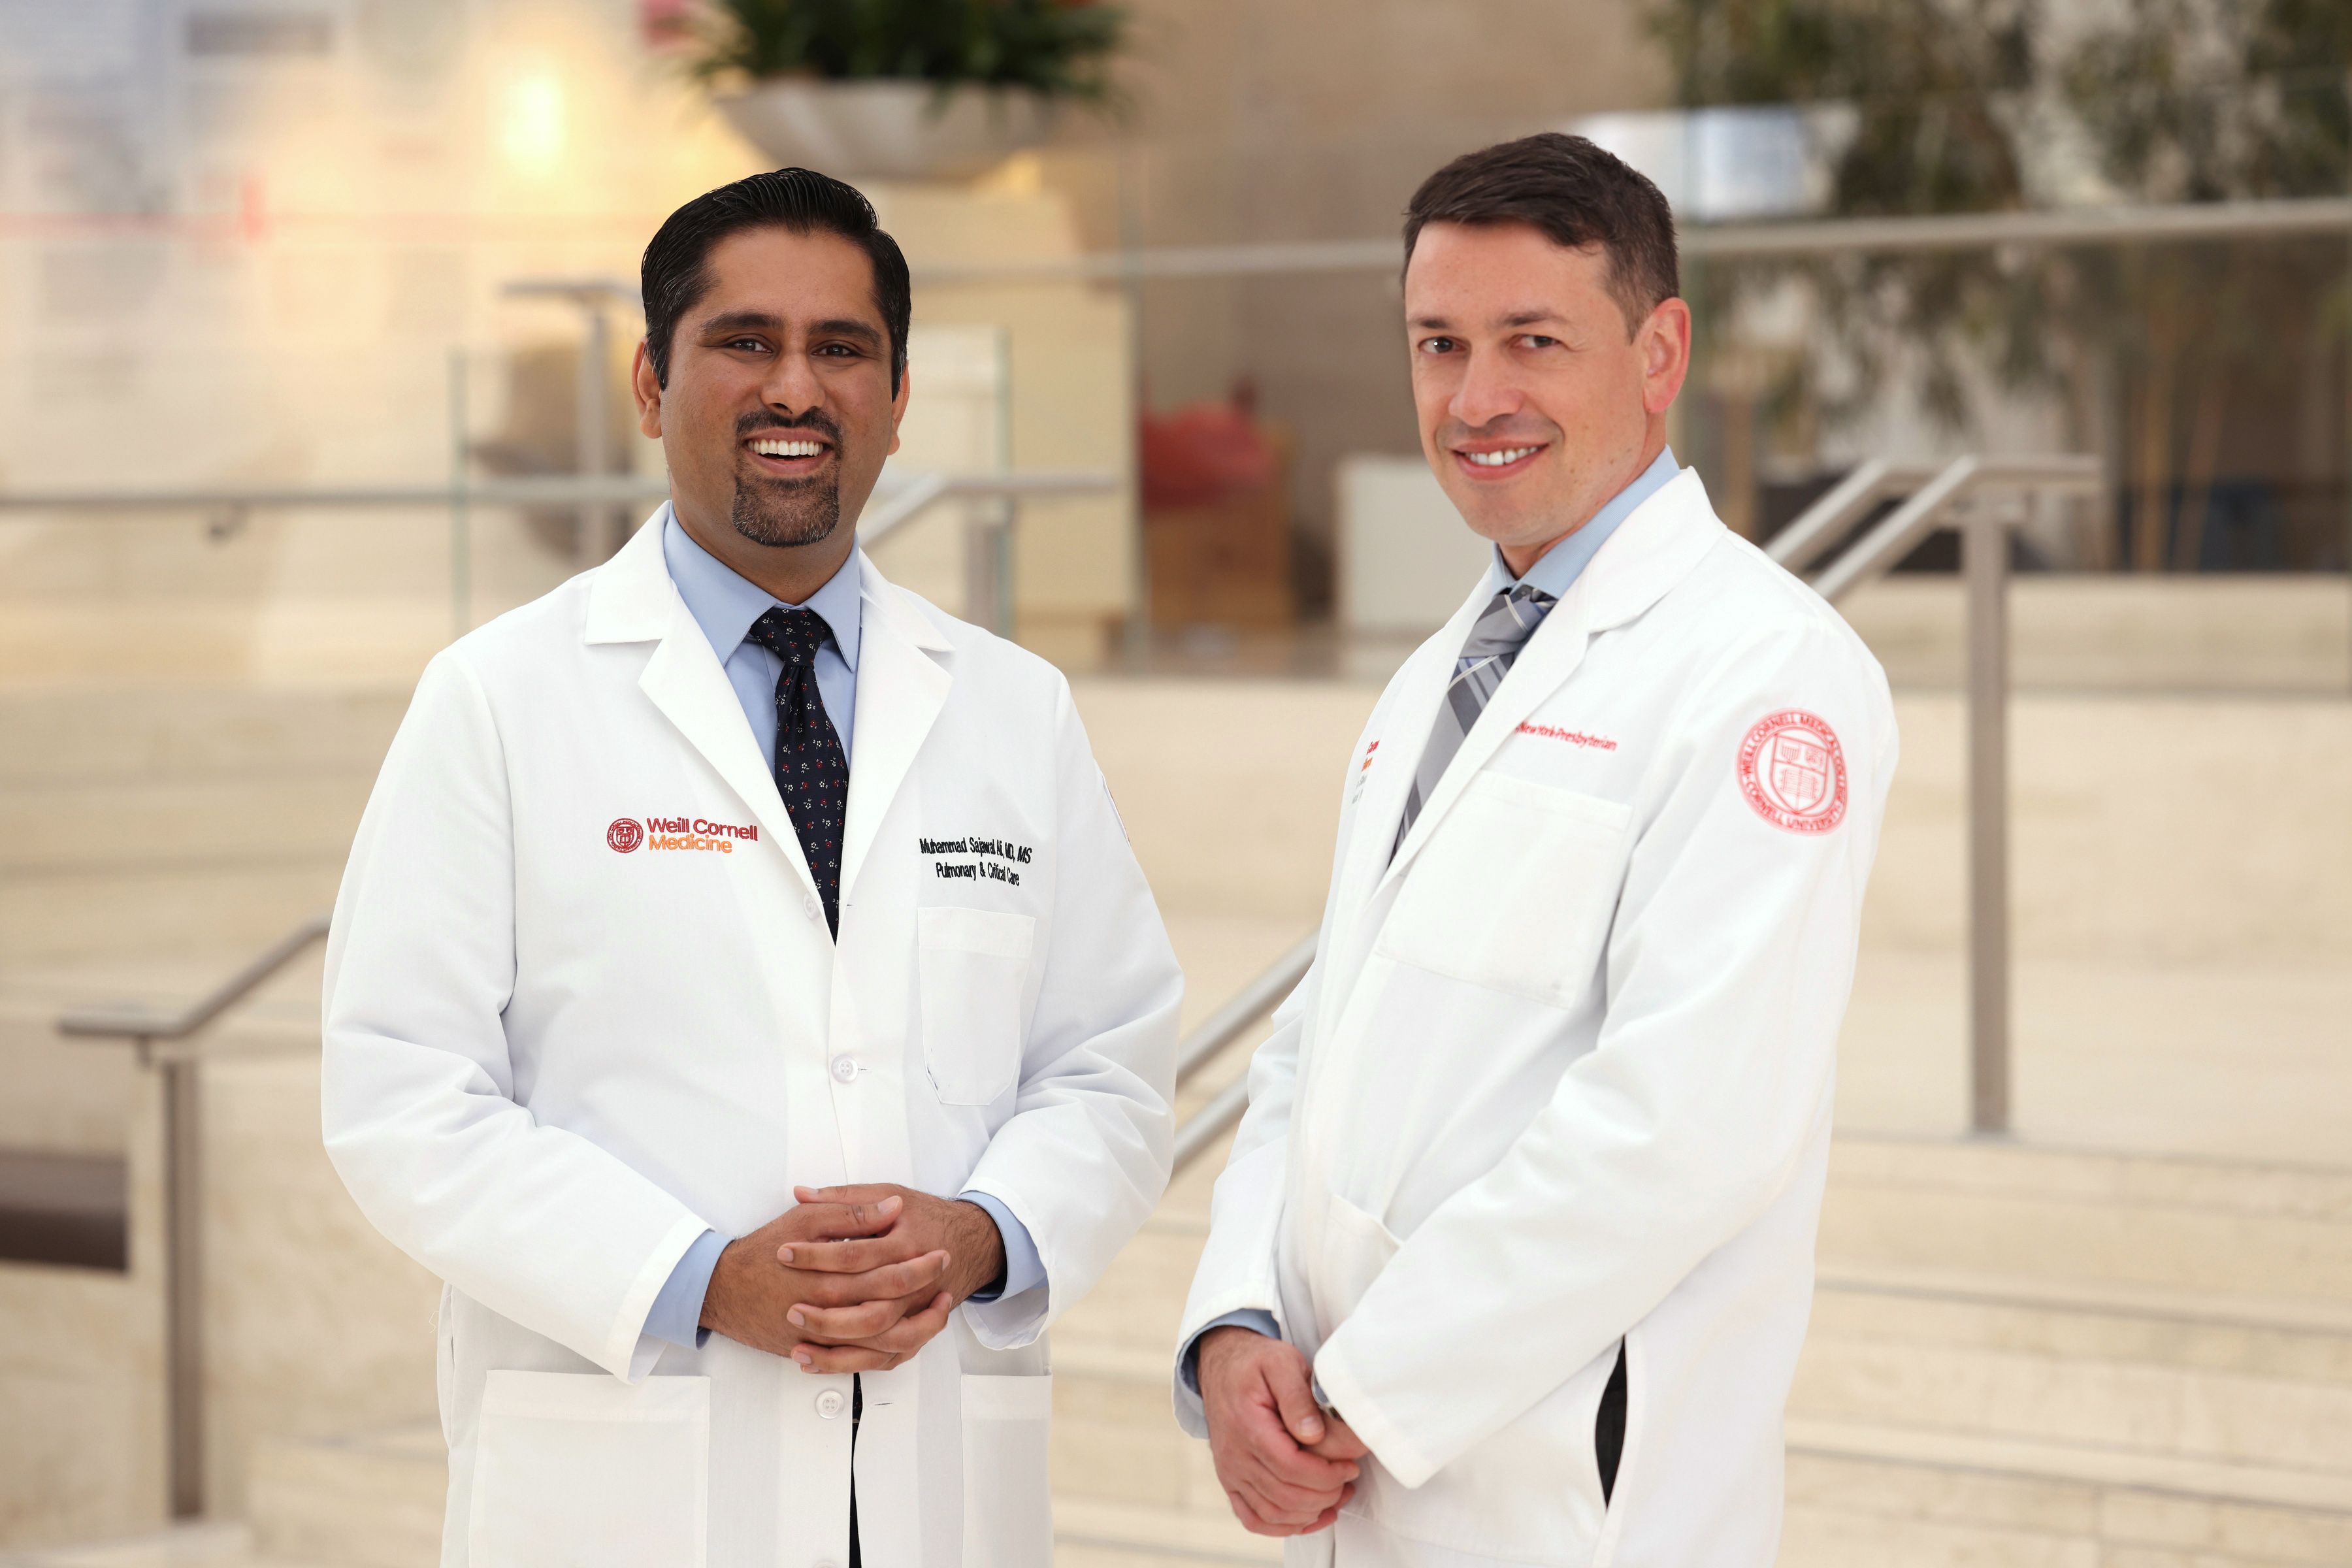 Dr. Ali and Dr. Shostak